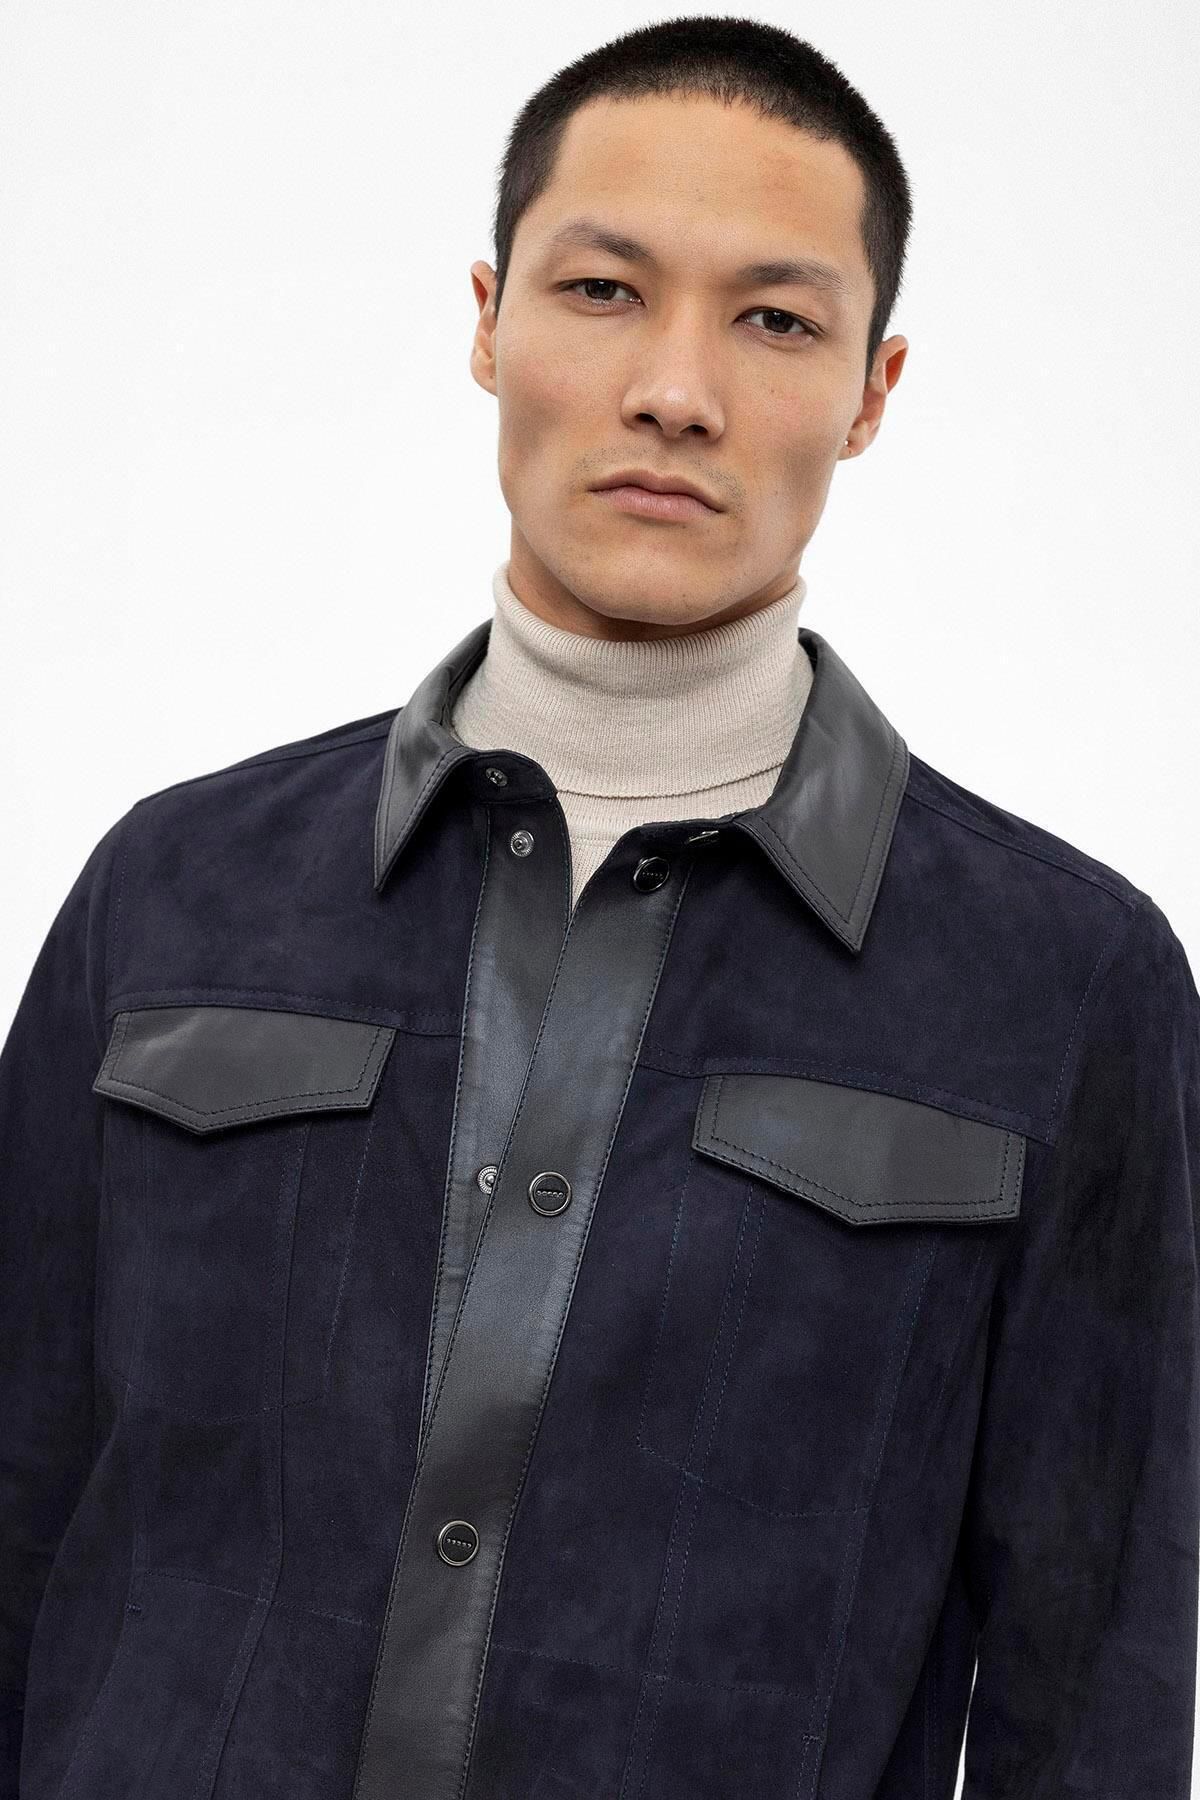 Deriderim ژاکت جیر بدون خط چرمی تزیین شده با سربندی آبی سرمه ای